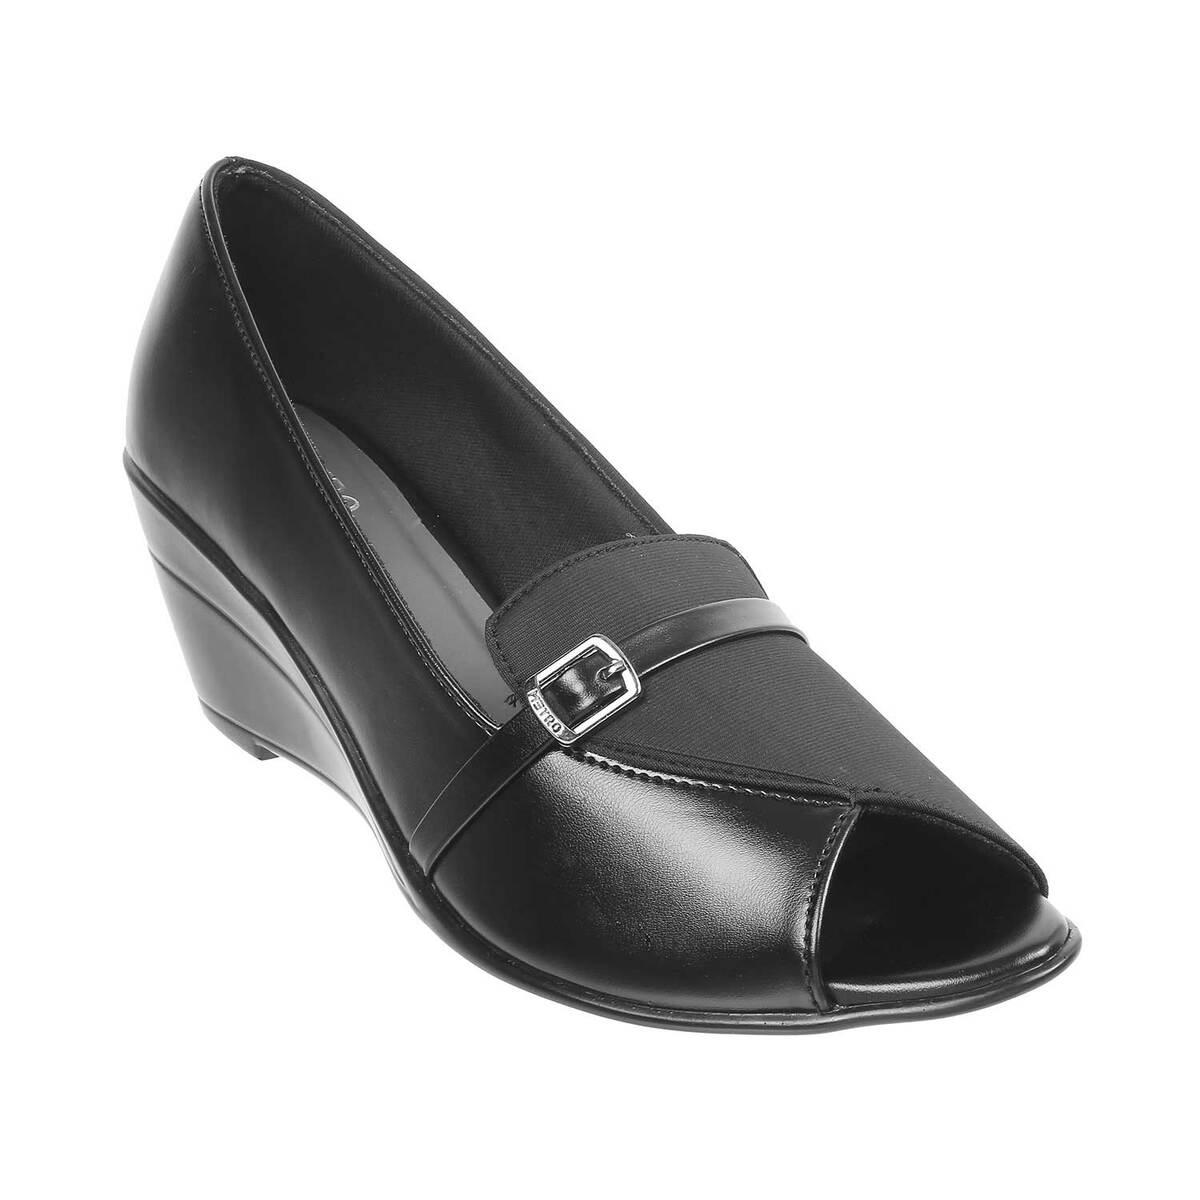 Bleecker & Bond Black Heels Size 8M elegant formal | eBay